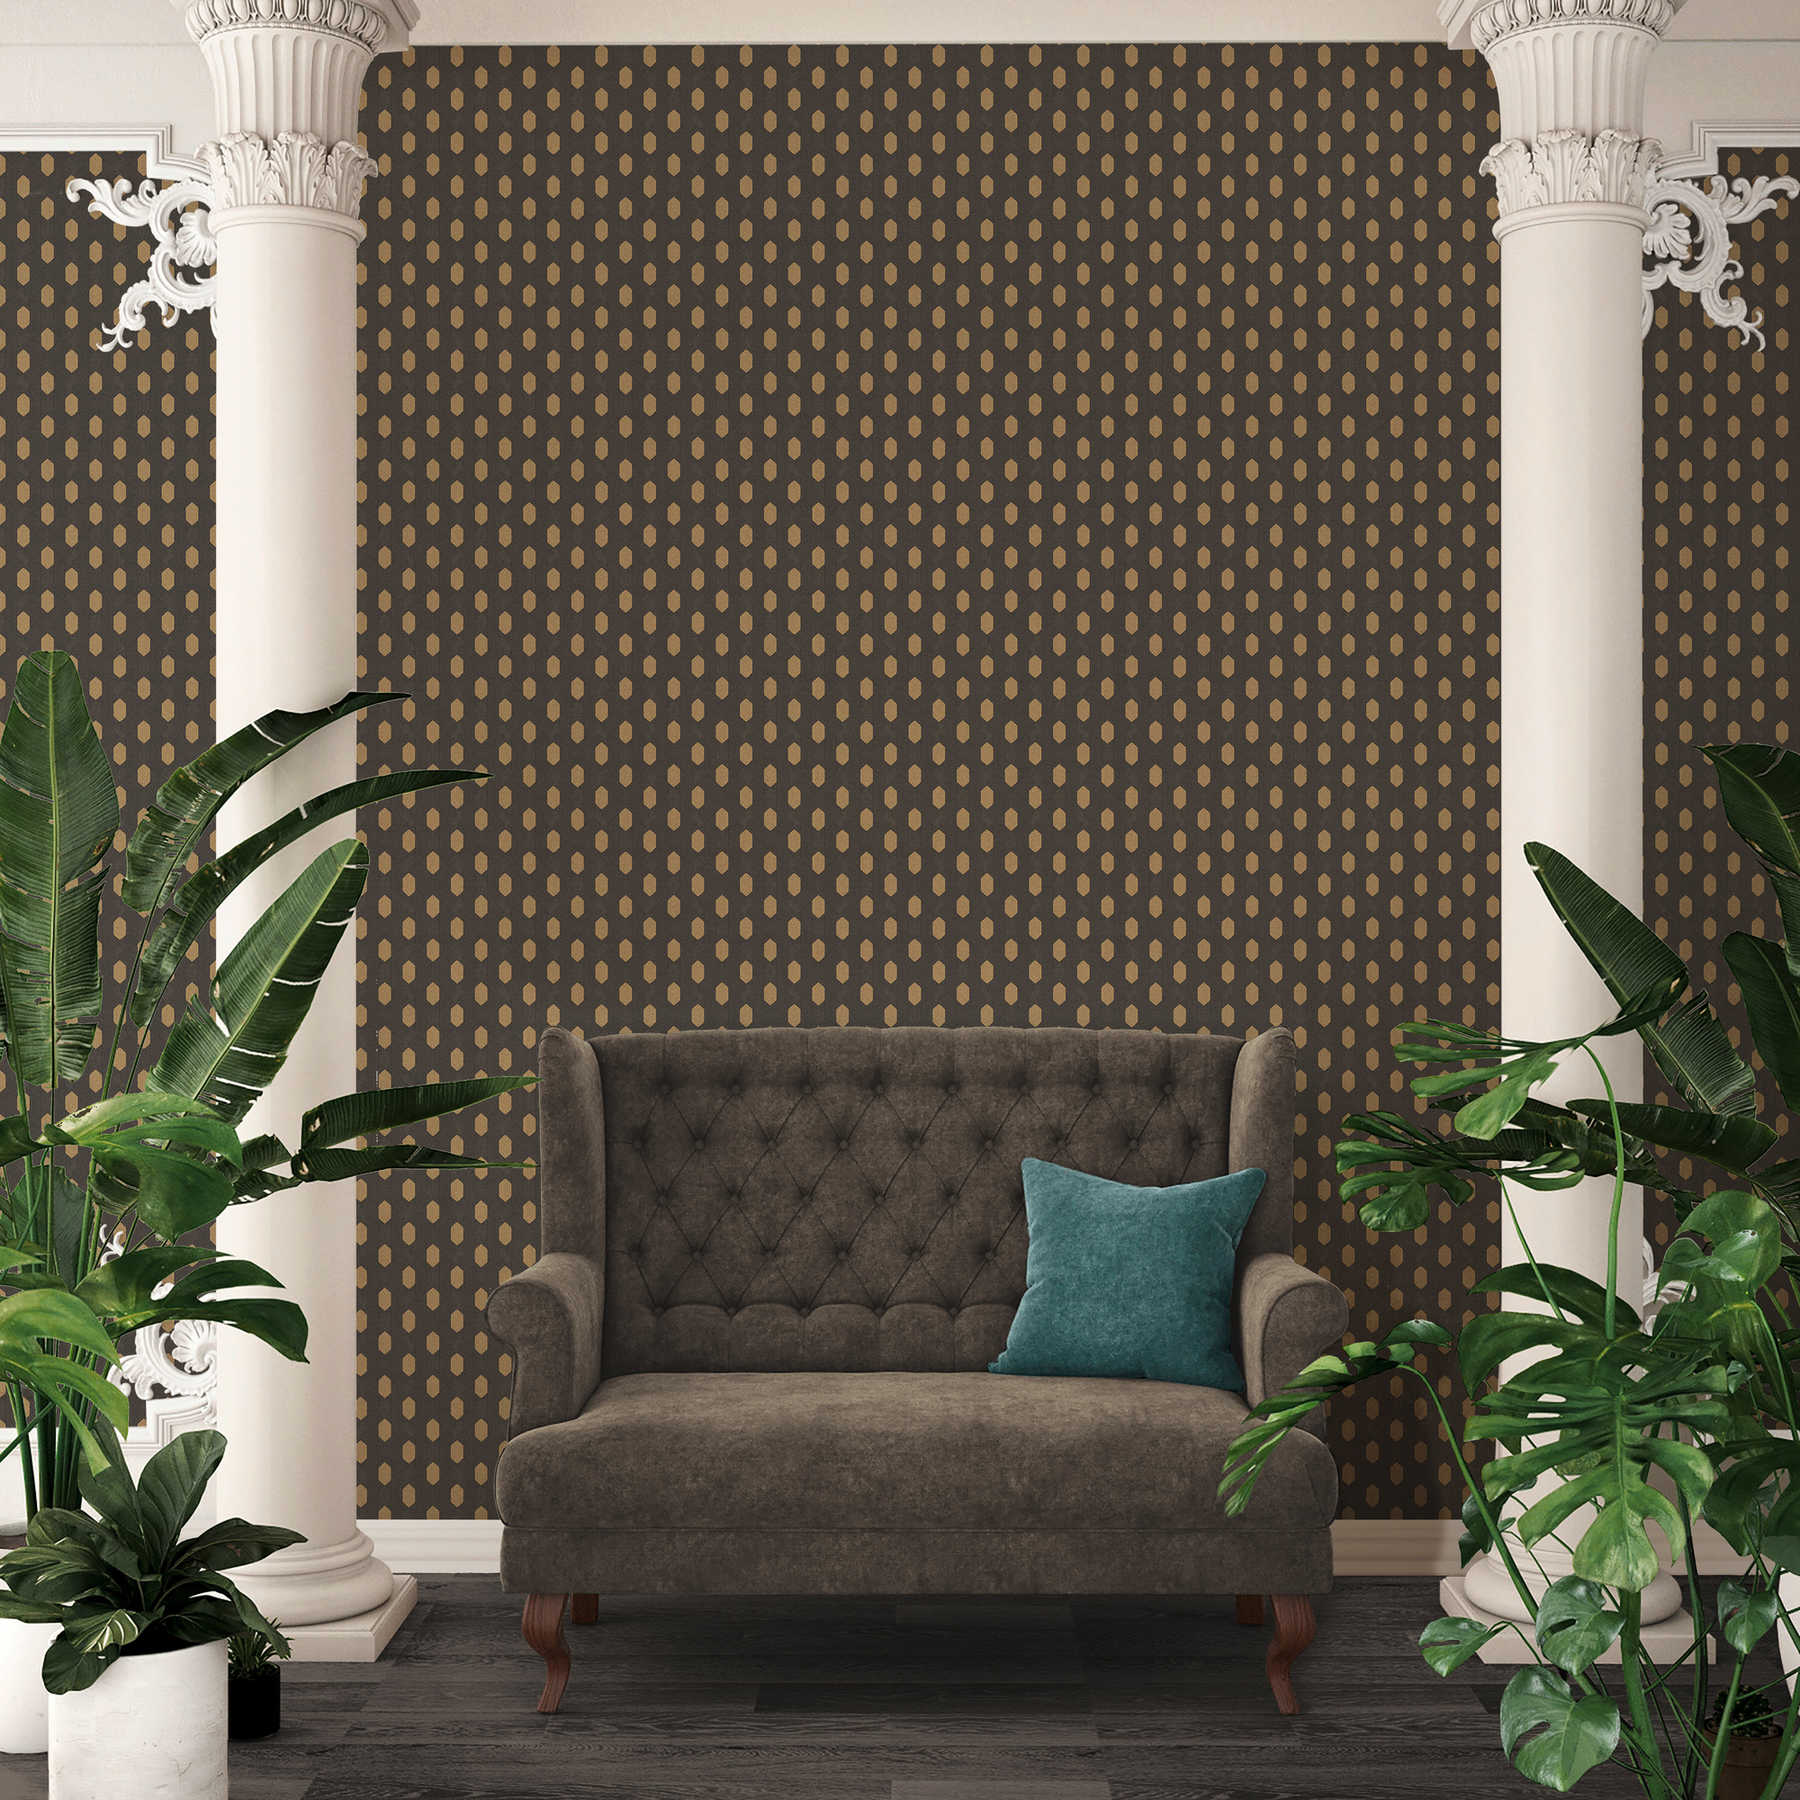             Elegant plain wallpaper with golden pattern - black, gold, brown
        